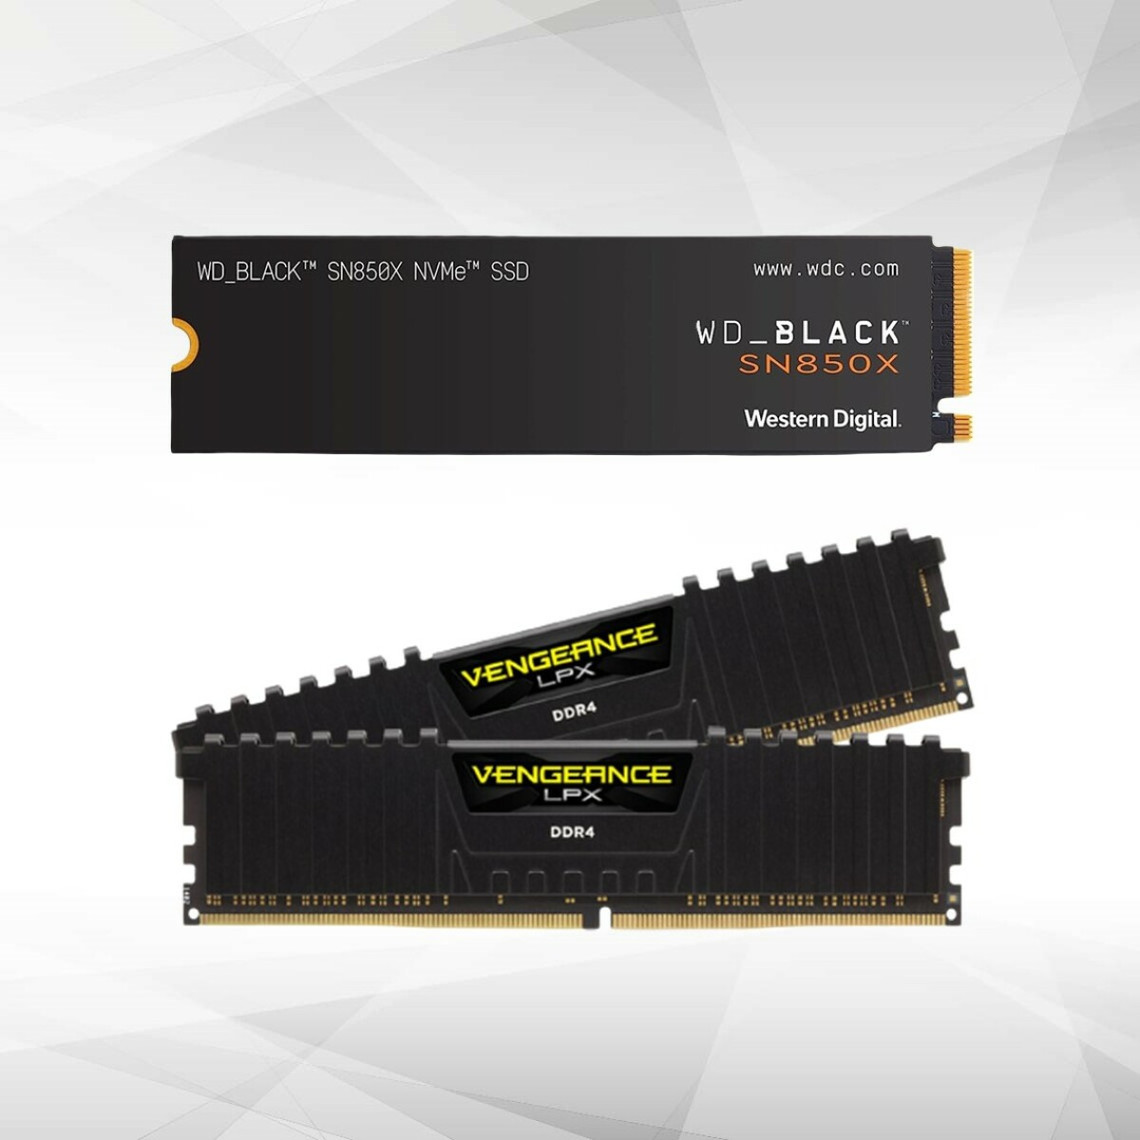 SSD WDBLACK SN850X NVMe™ 1000Go PCIe Gen4 x4 Vengeance LPX 2 x 16 Go DDR4 3200 MHz Noir